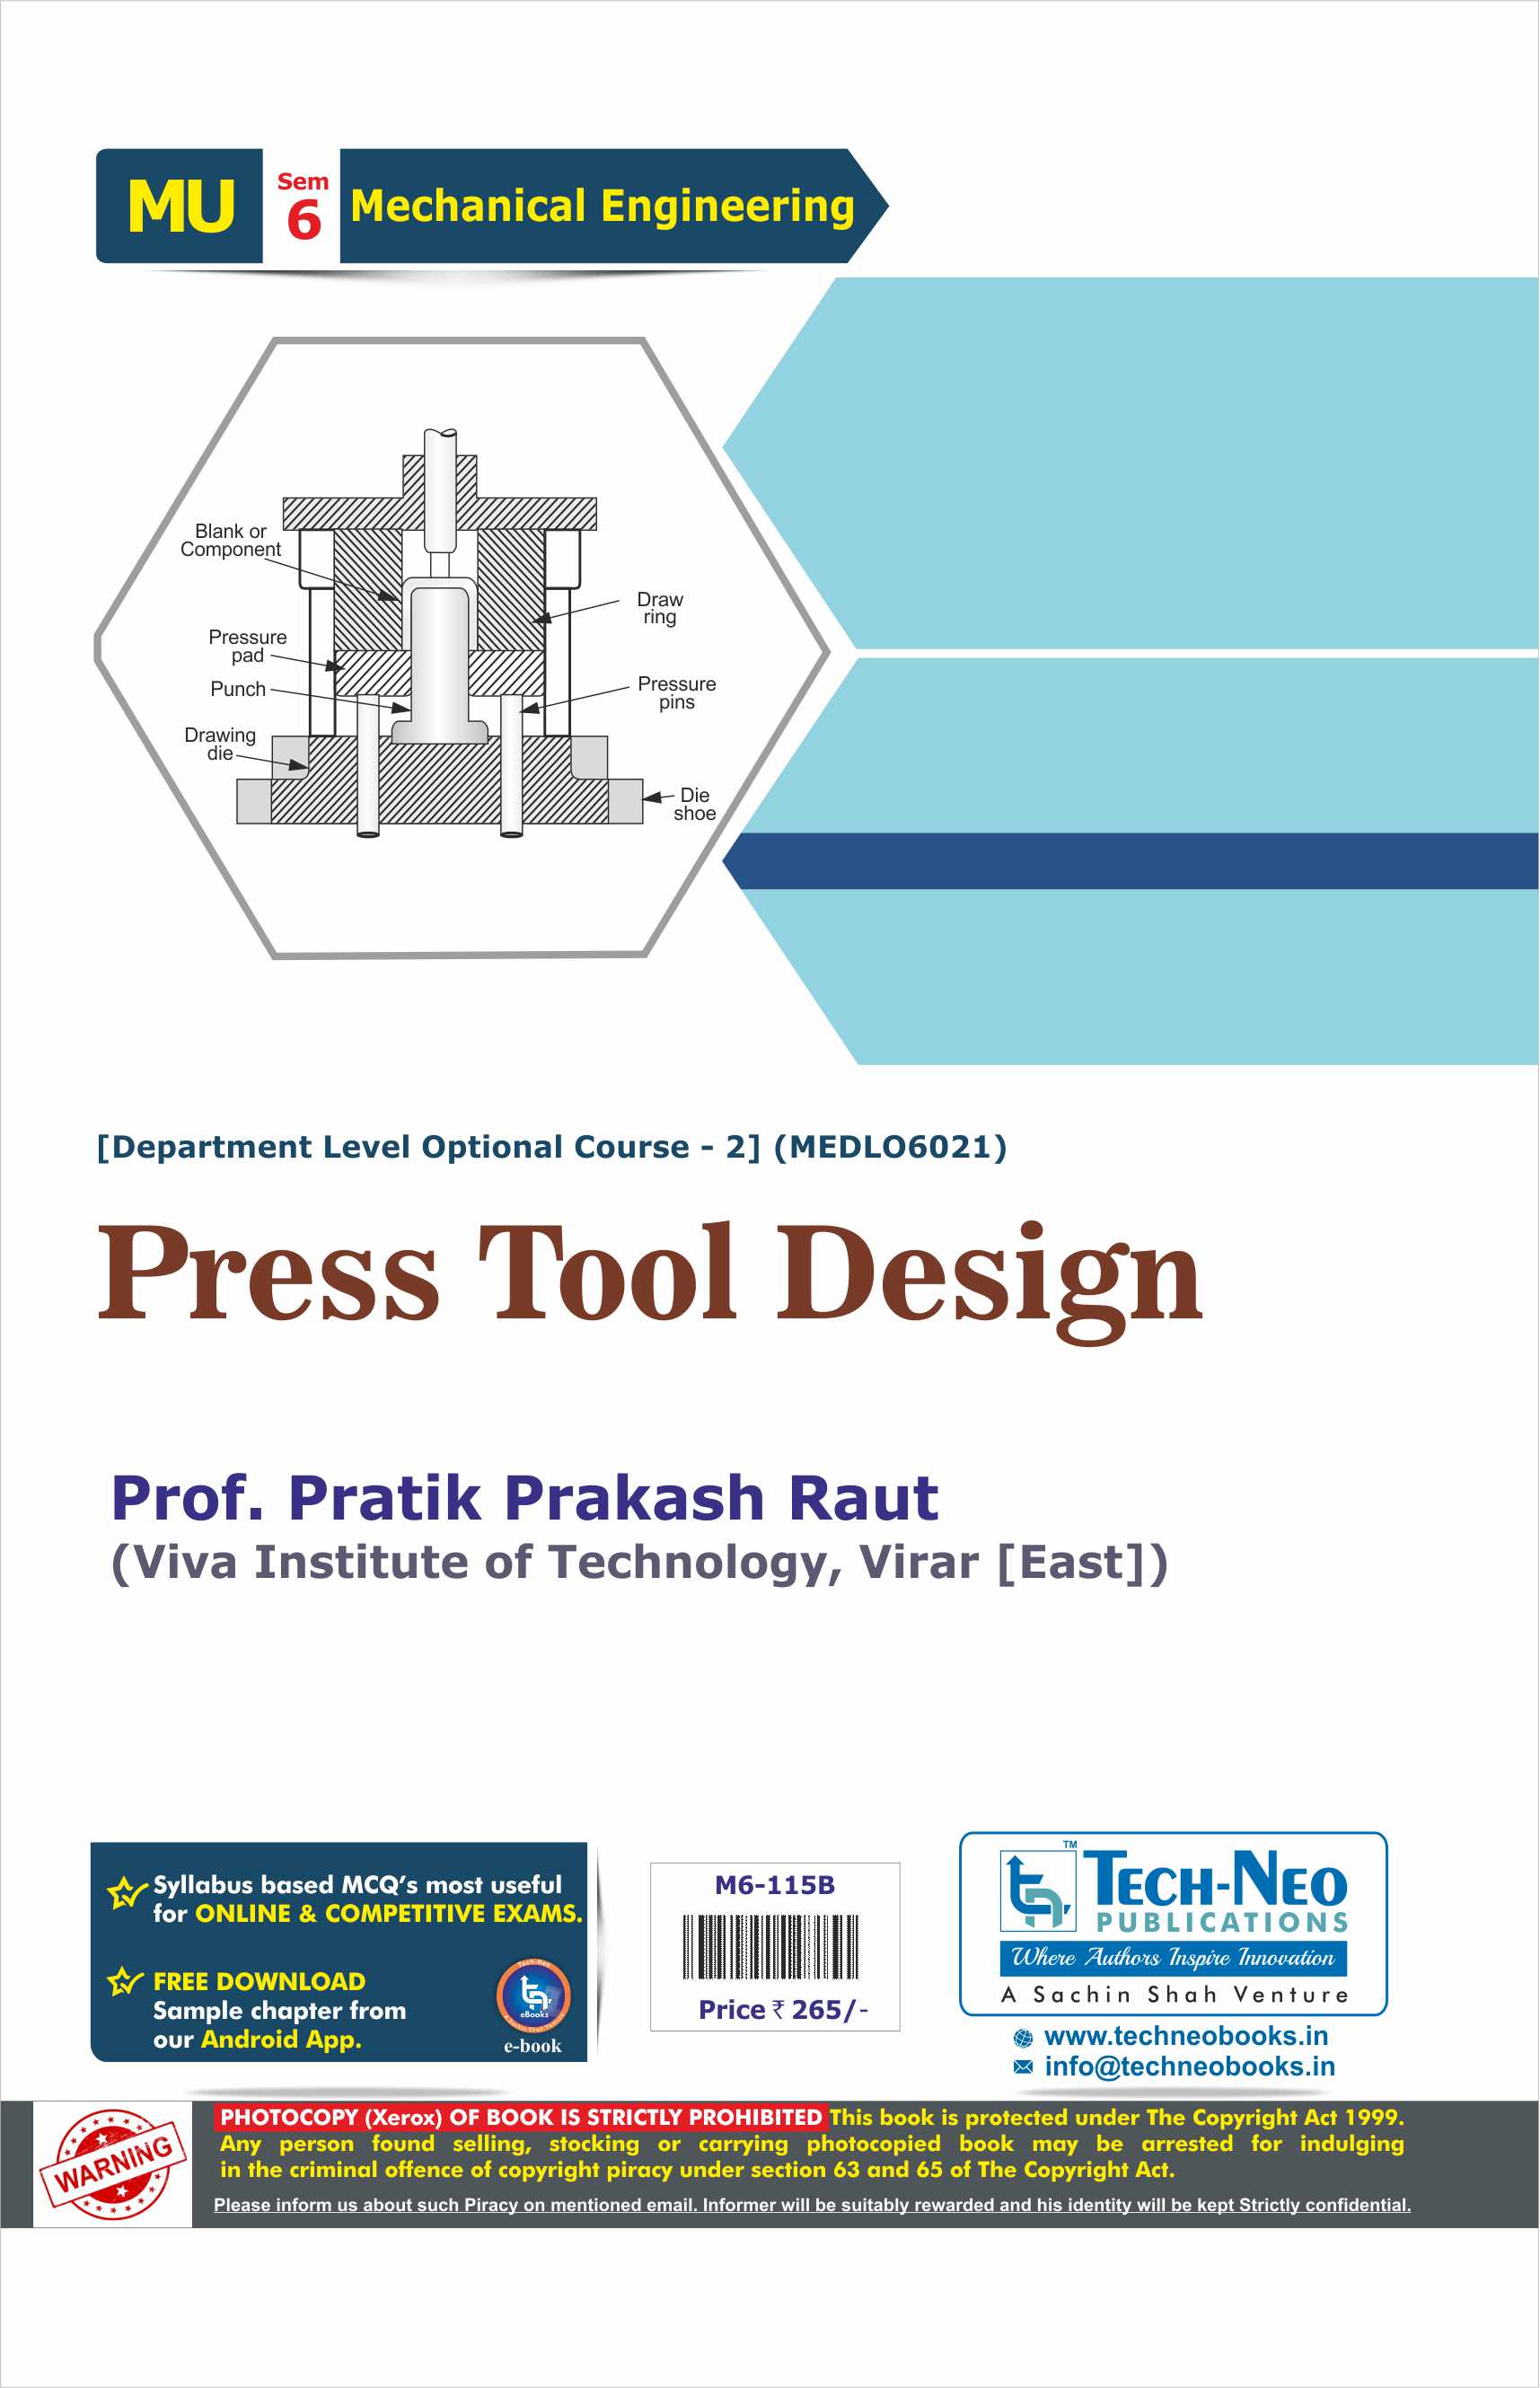 Press Tool Design